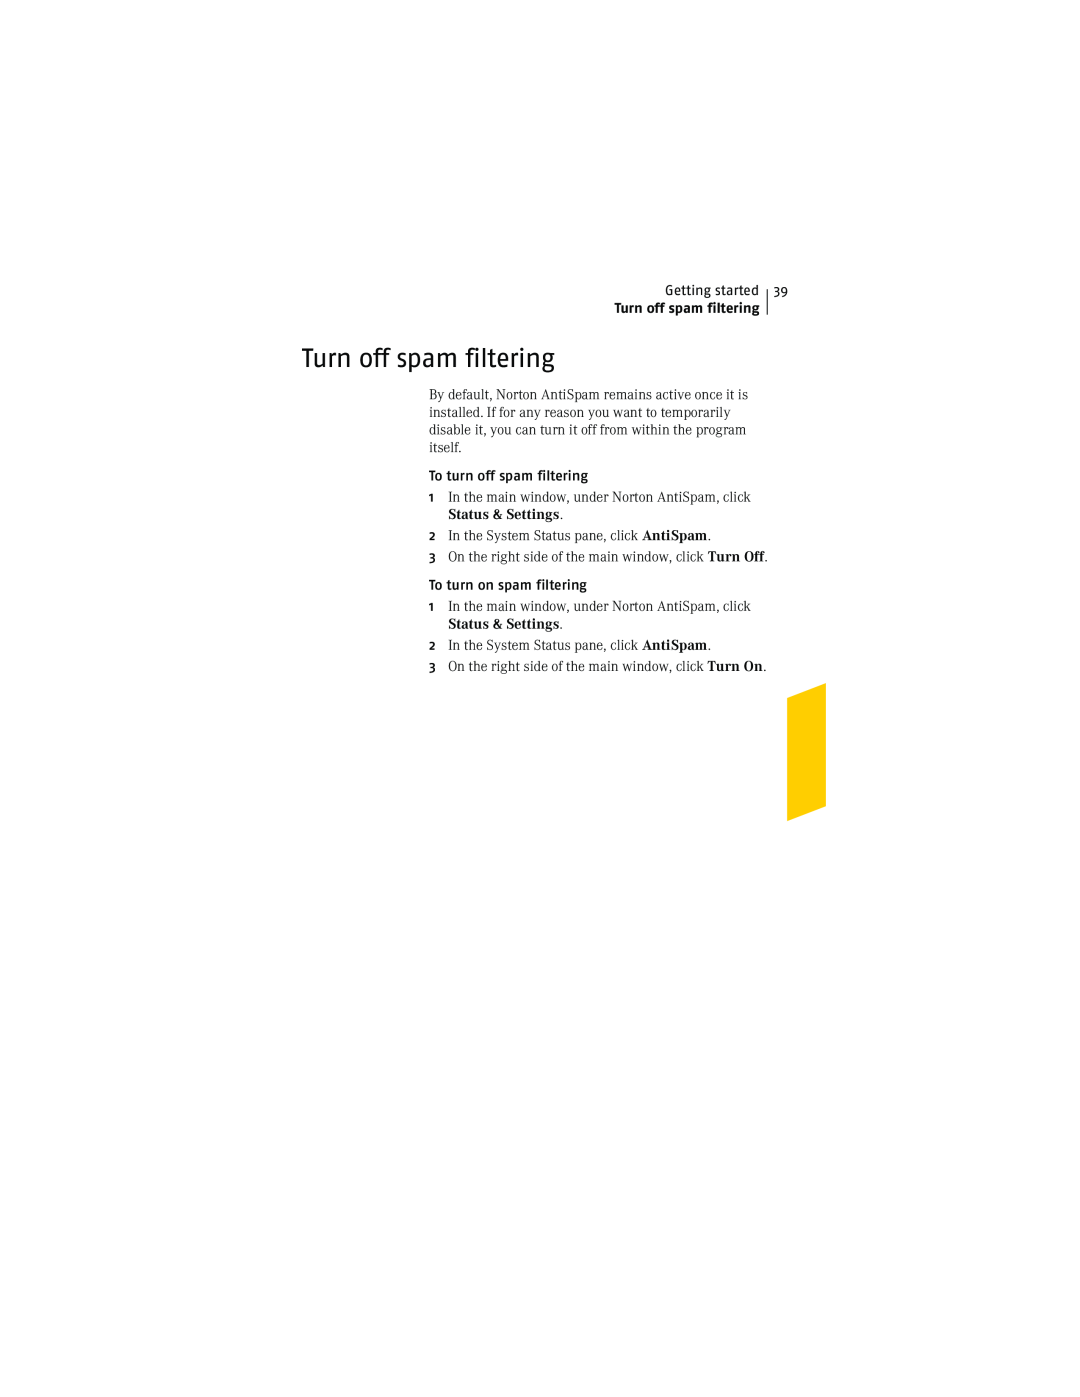 Symantec NIS2005 manual Turn off spam filtering 